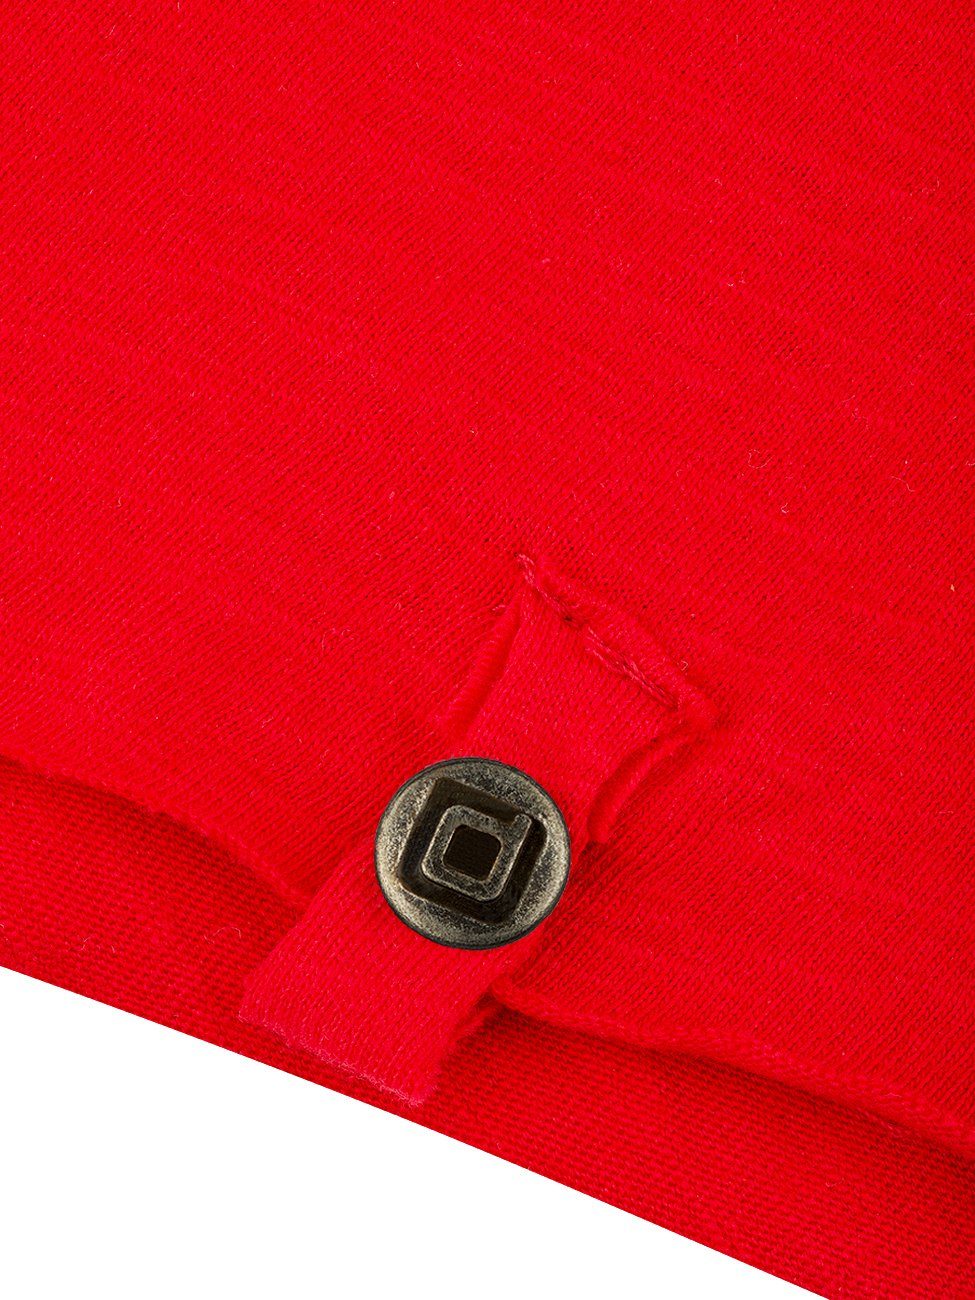 T-Shirt Baumwolle O-Neck 100% riverso (4-tlg) Middle (15300) Red RIVJonas